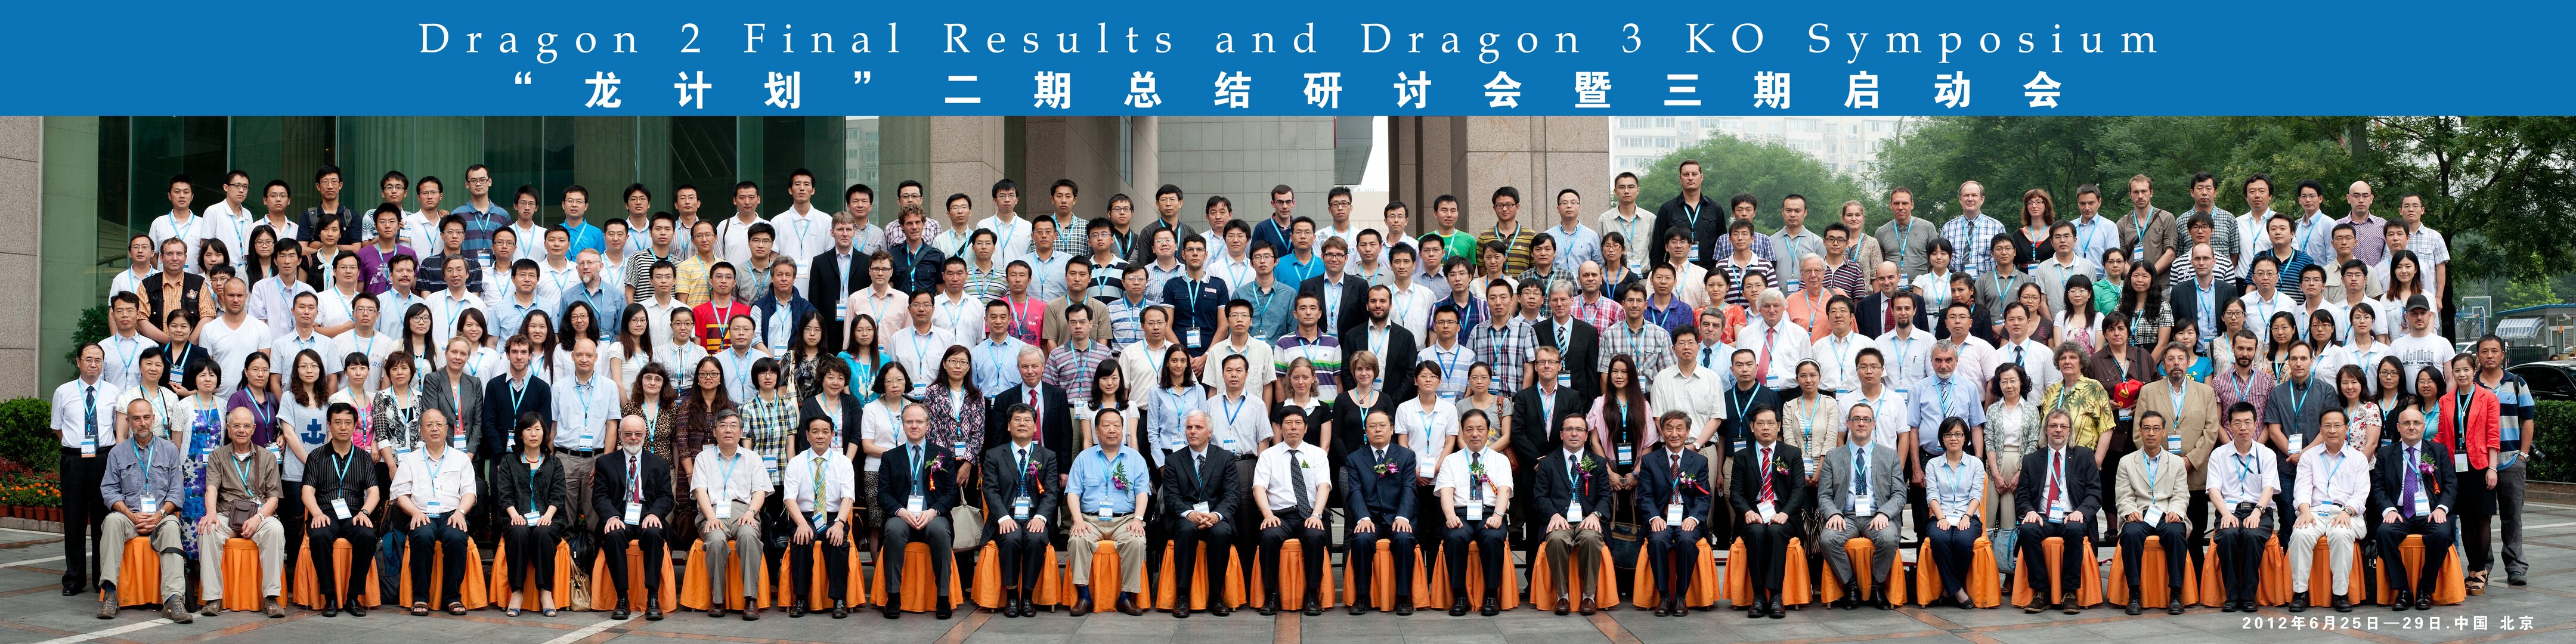 Dragon symposium